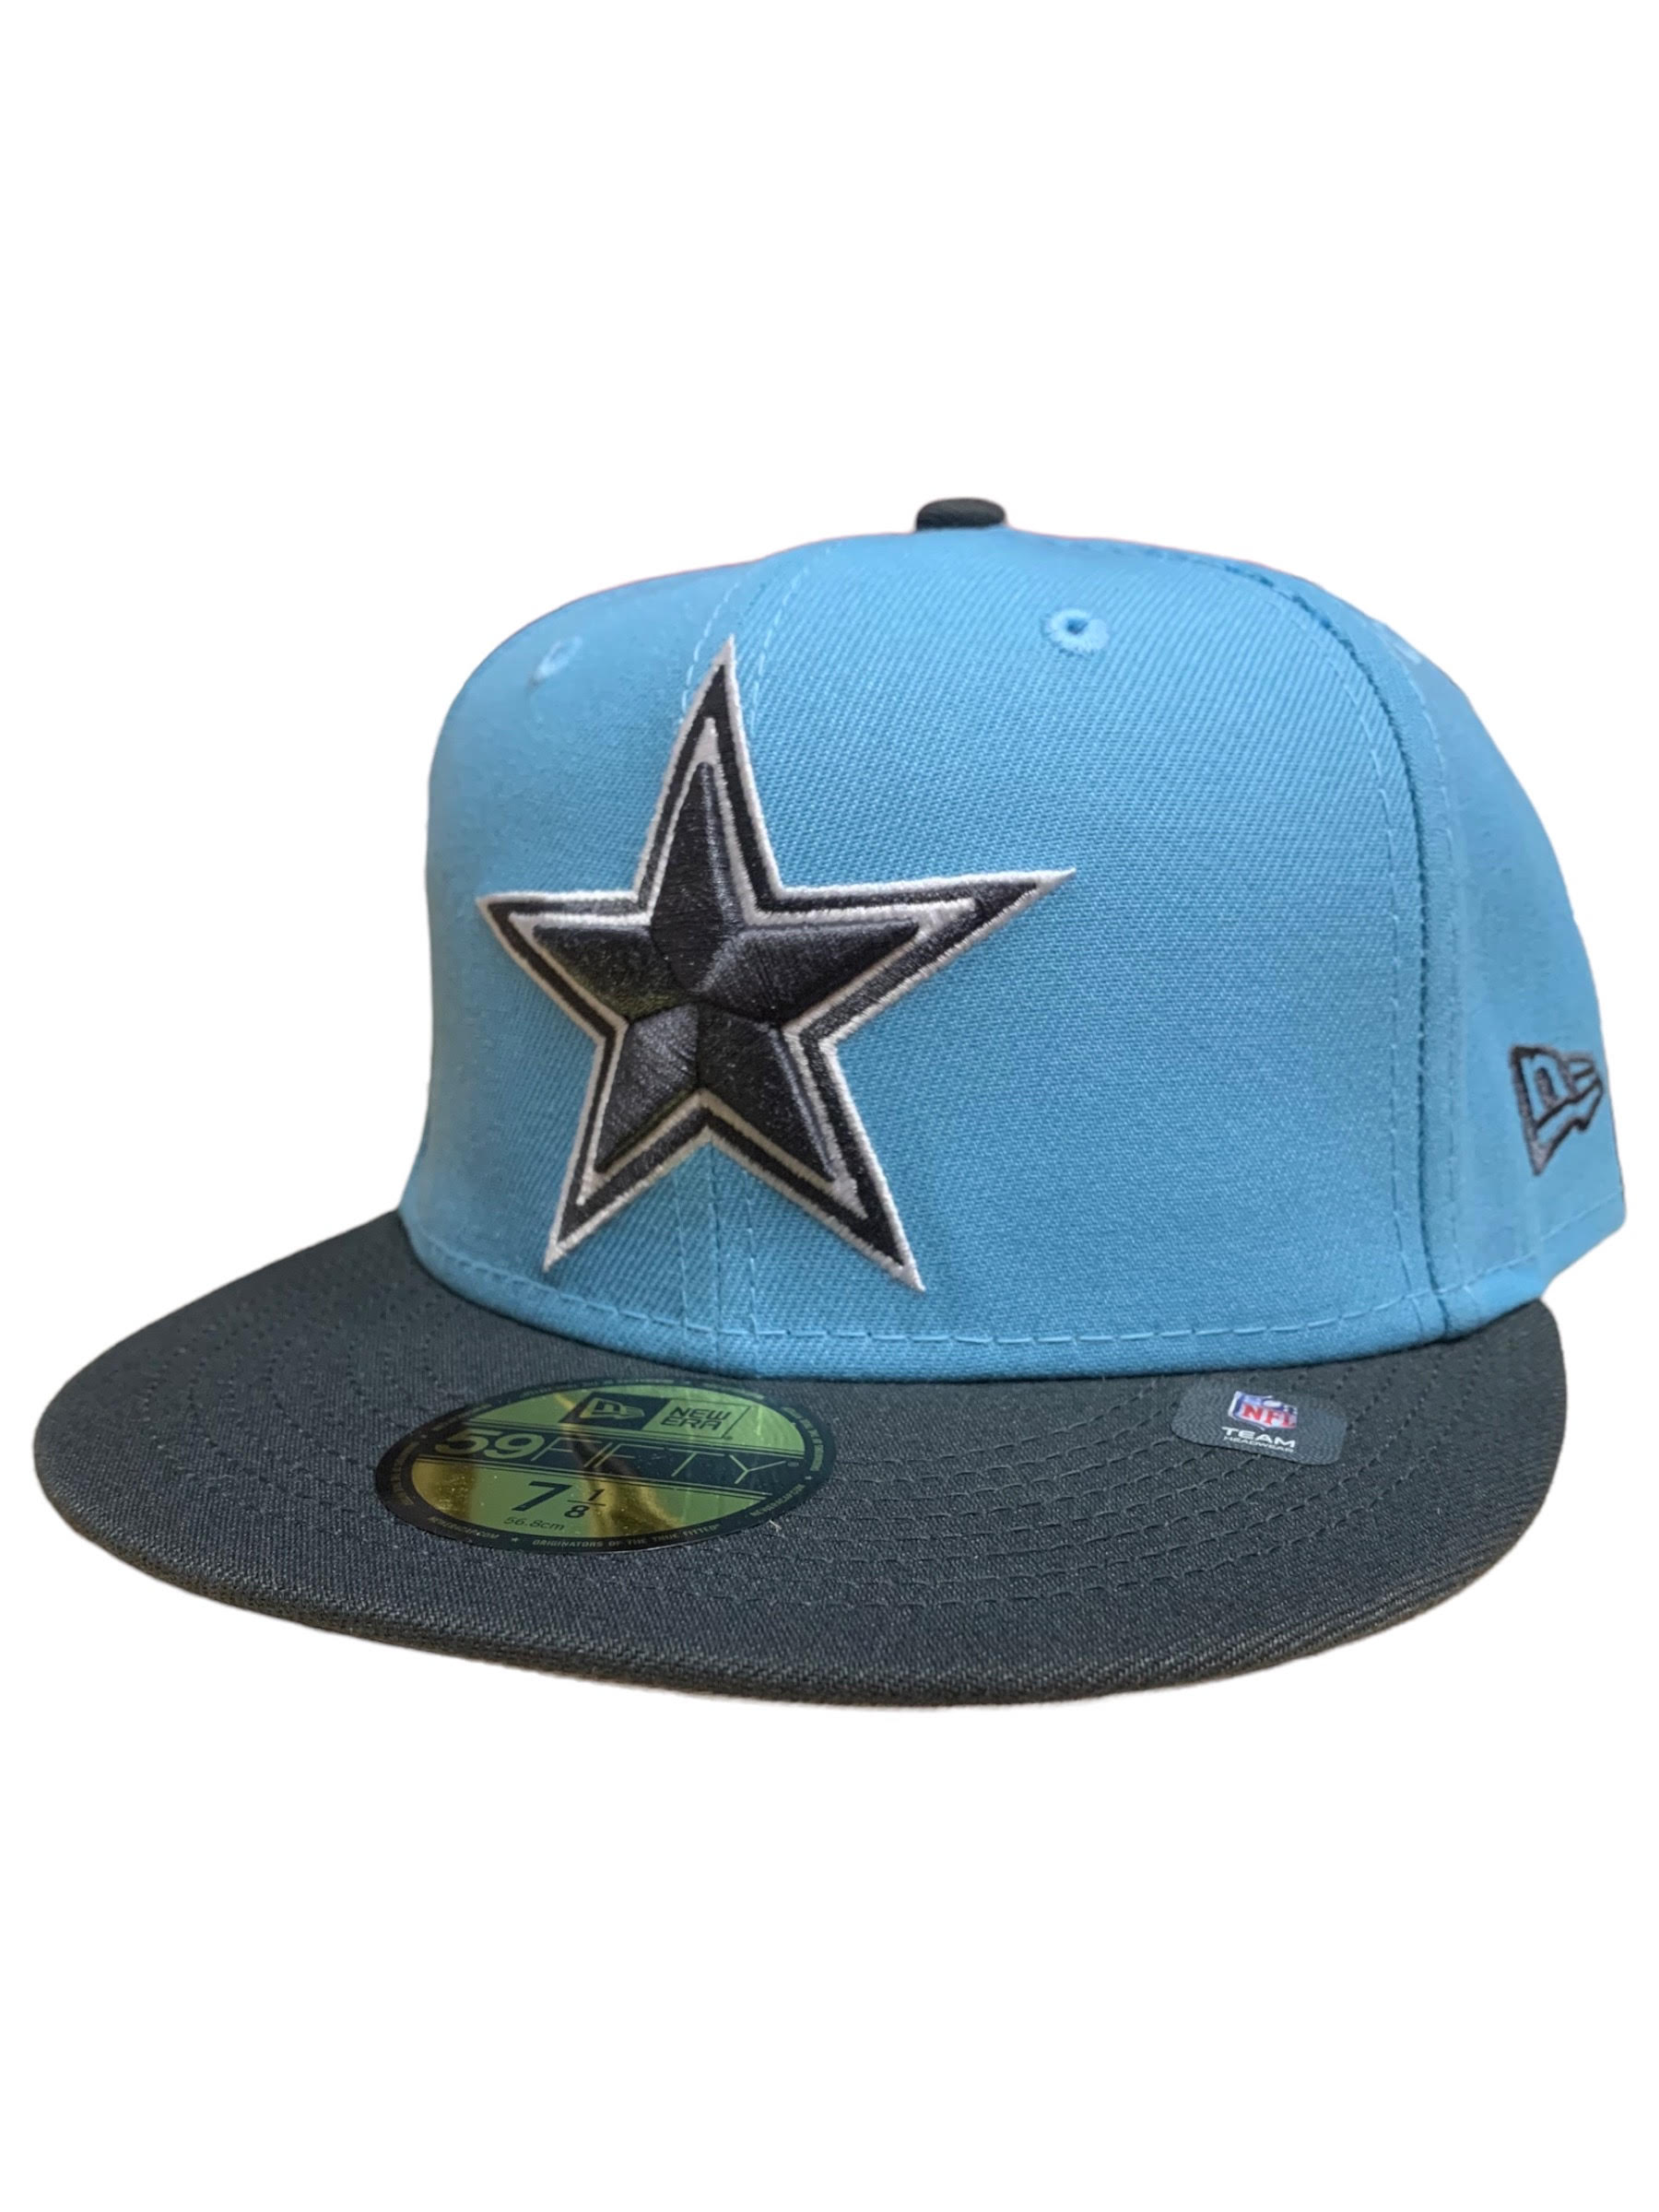 cool dallas cowboy hats